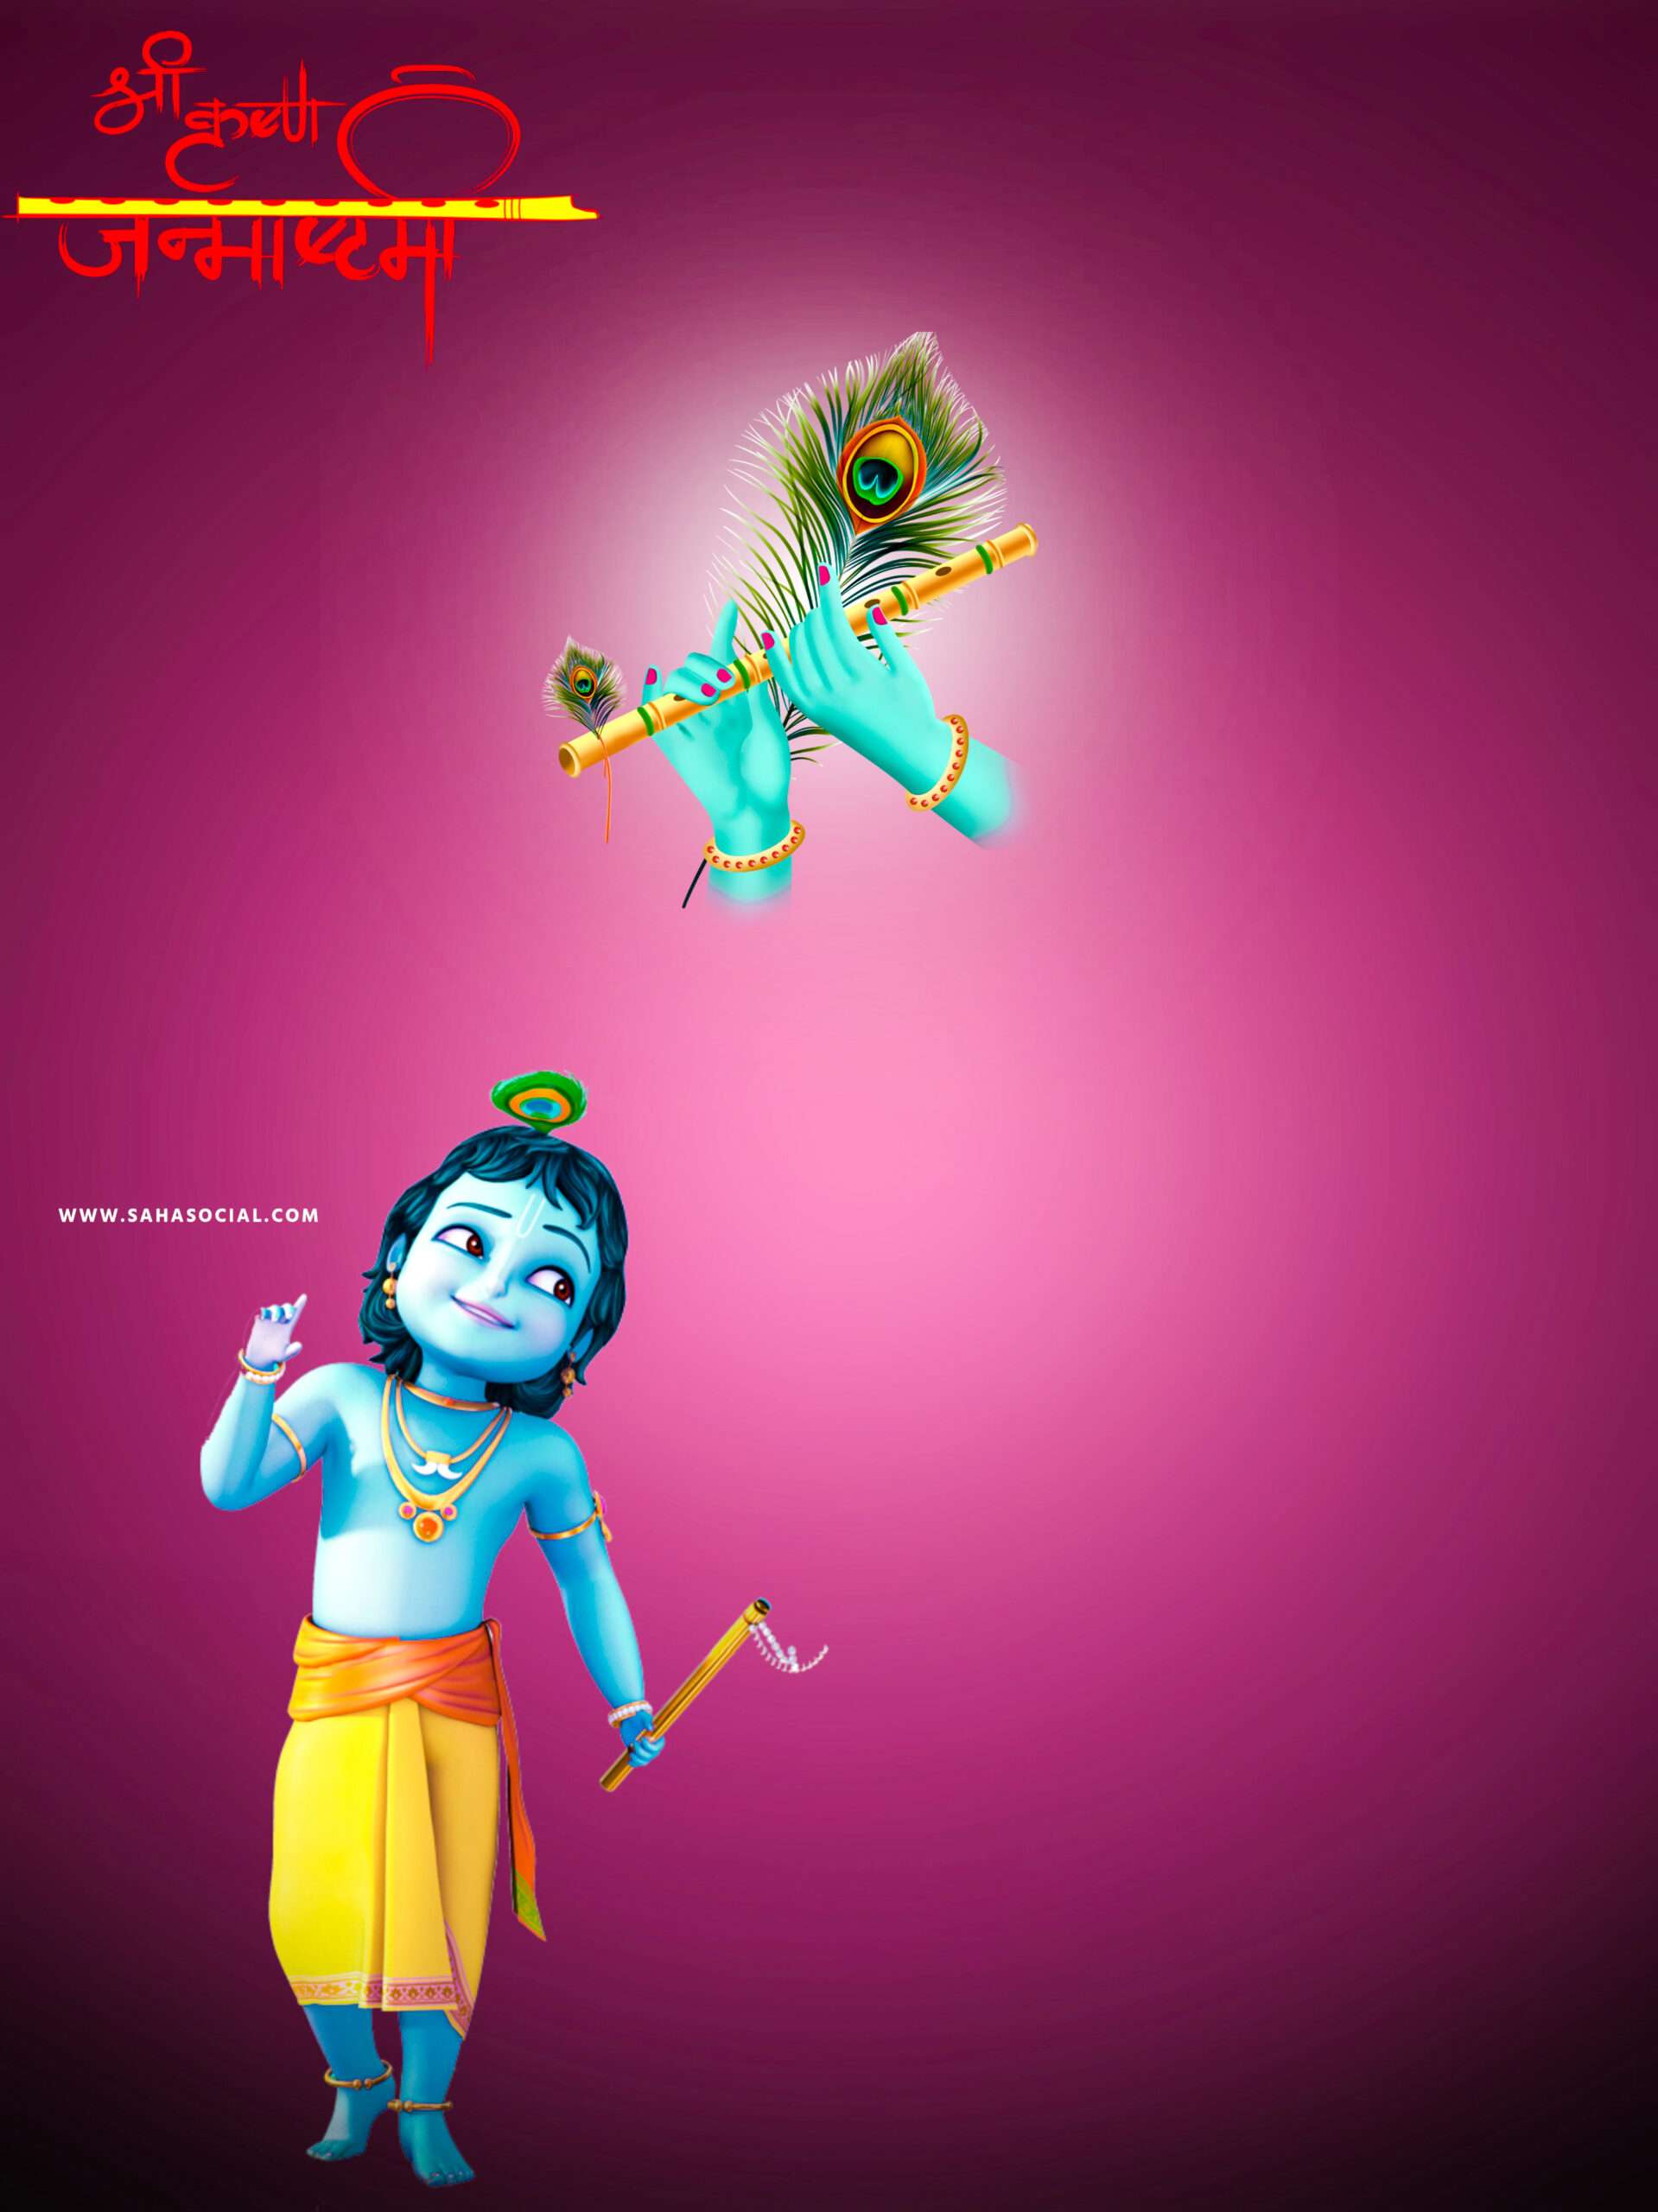 krishna photo editing background